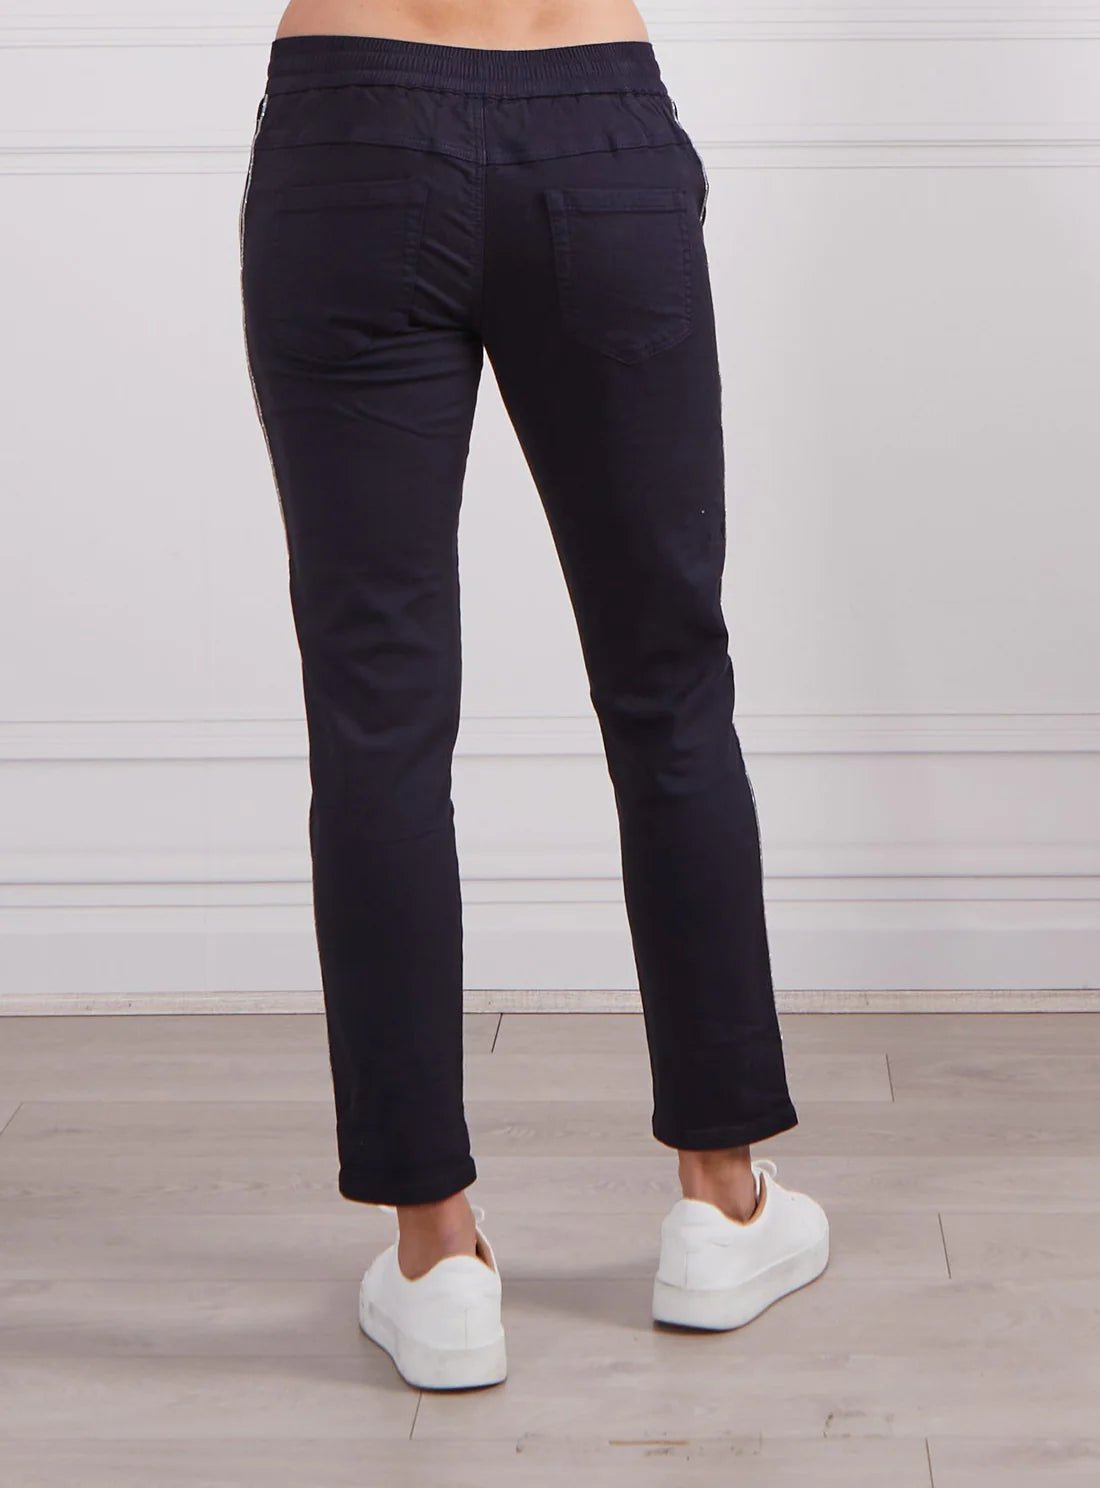 Brooklyn Denim Joggers - Navy - Sare StoreMonaco JeansPants